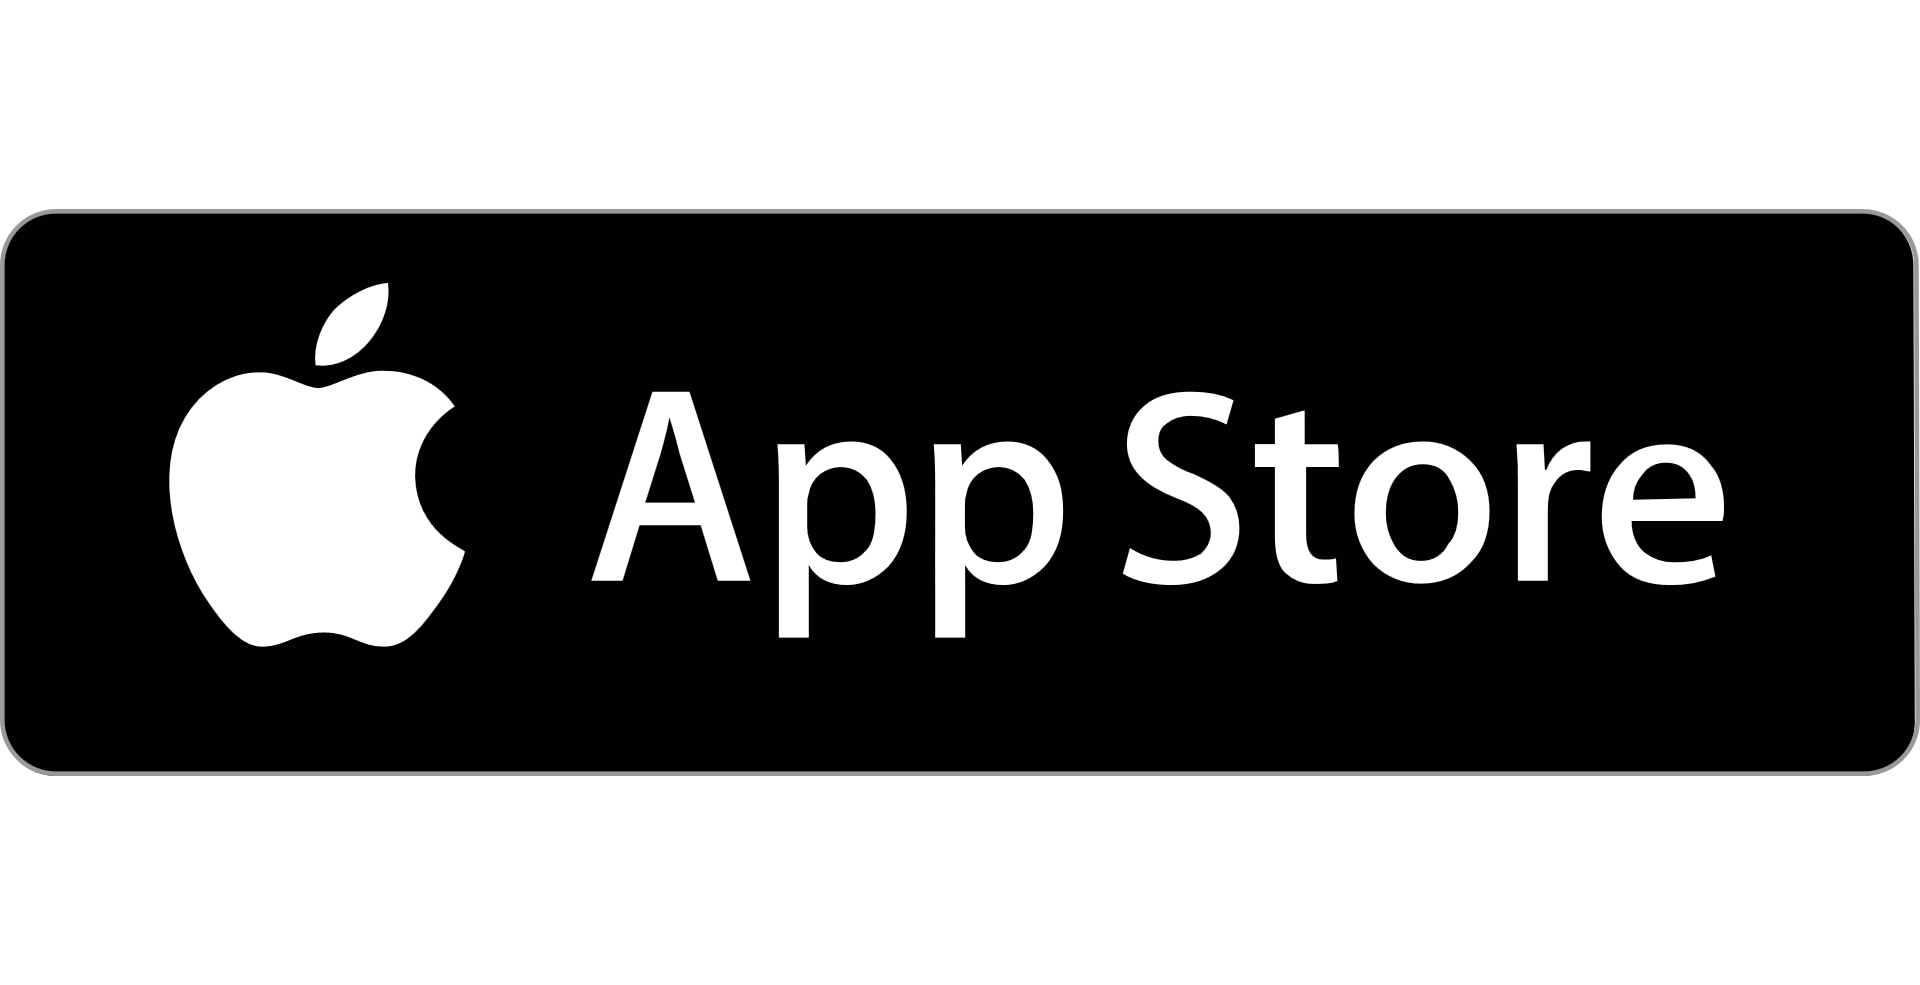 Download E Toll App on AppleStore